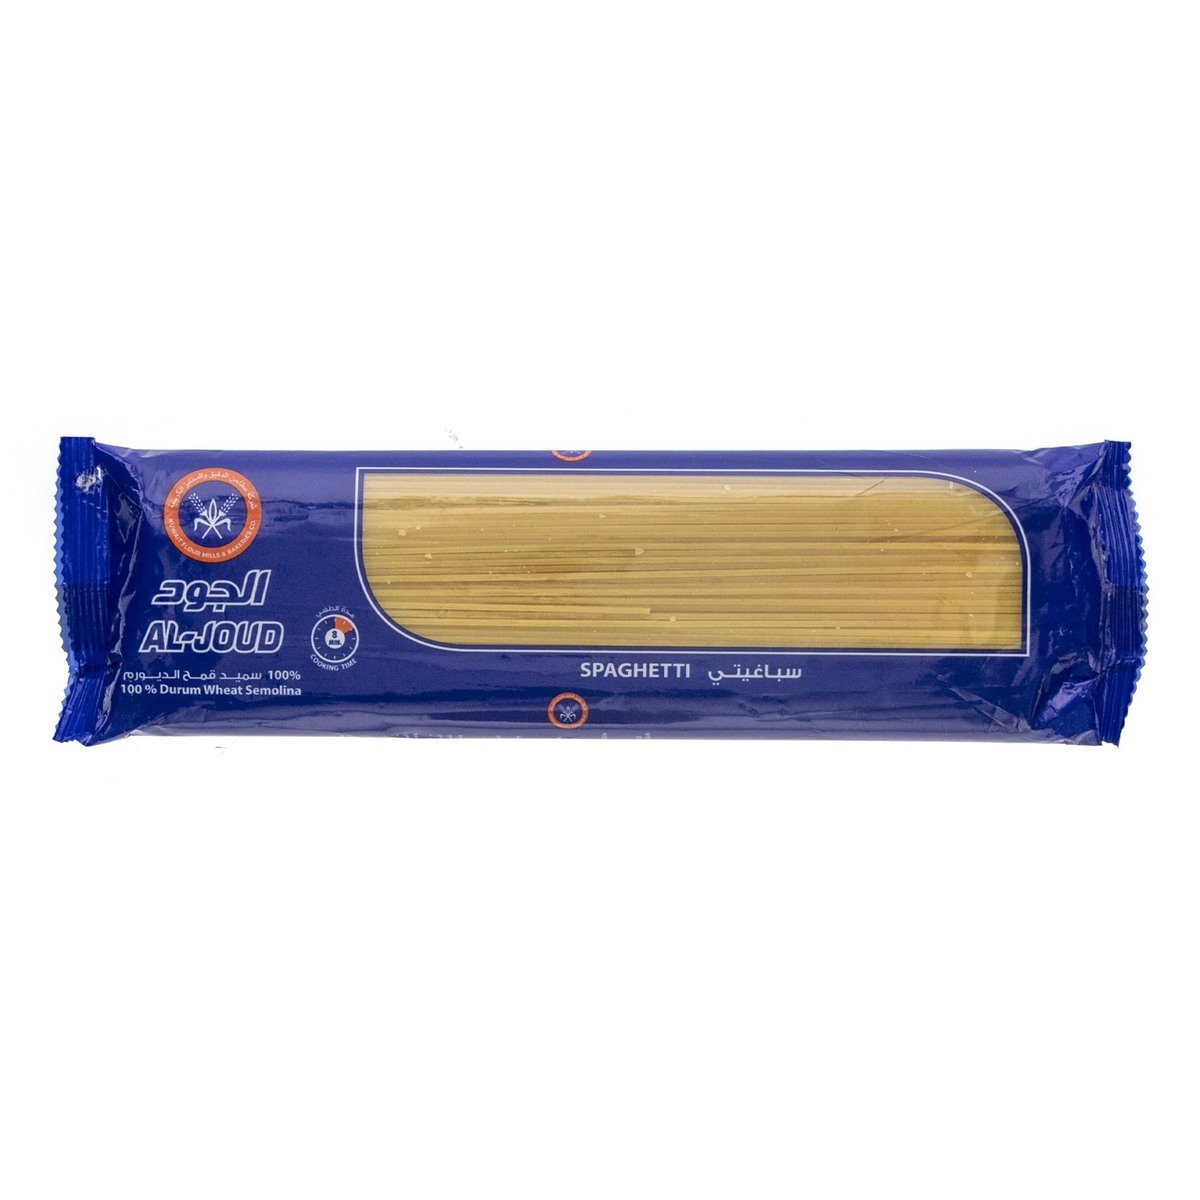 Al Joud Spaghetti Pasta 400 g